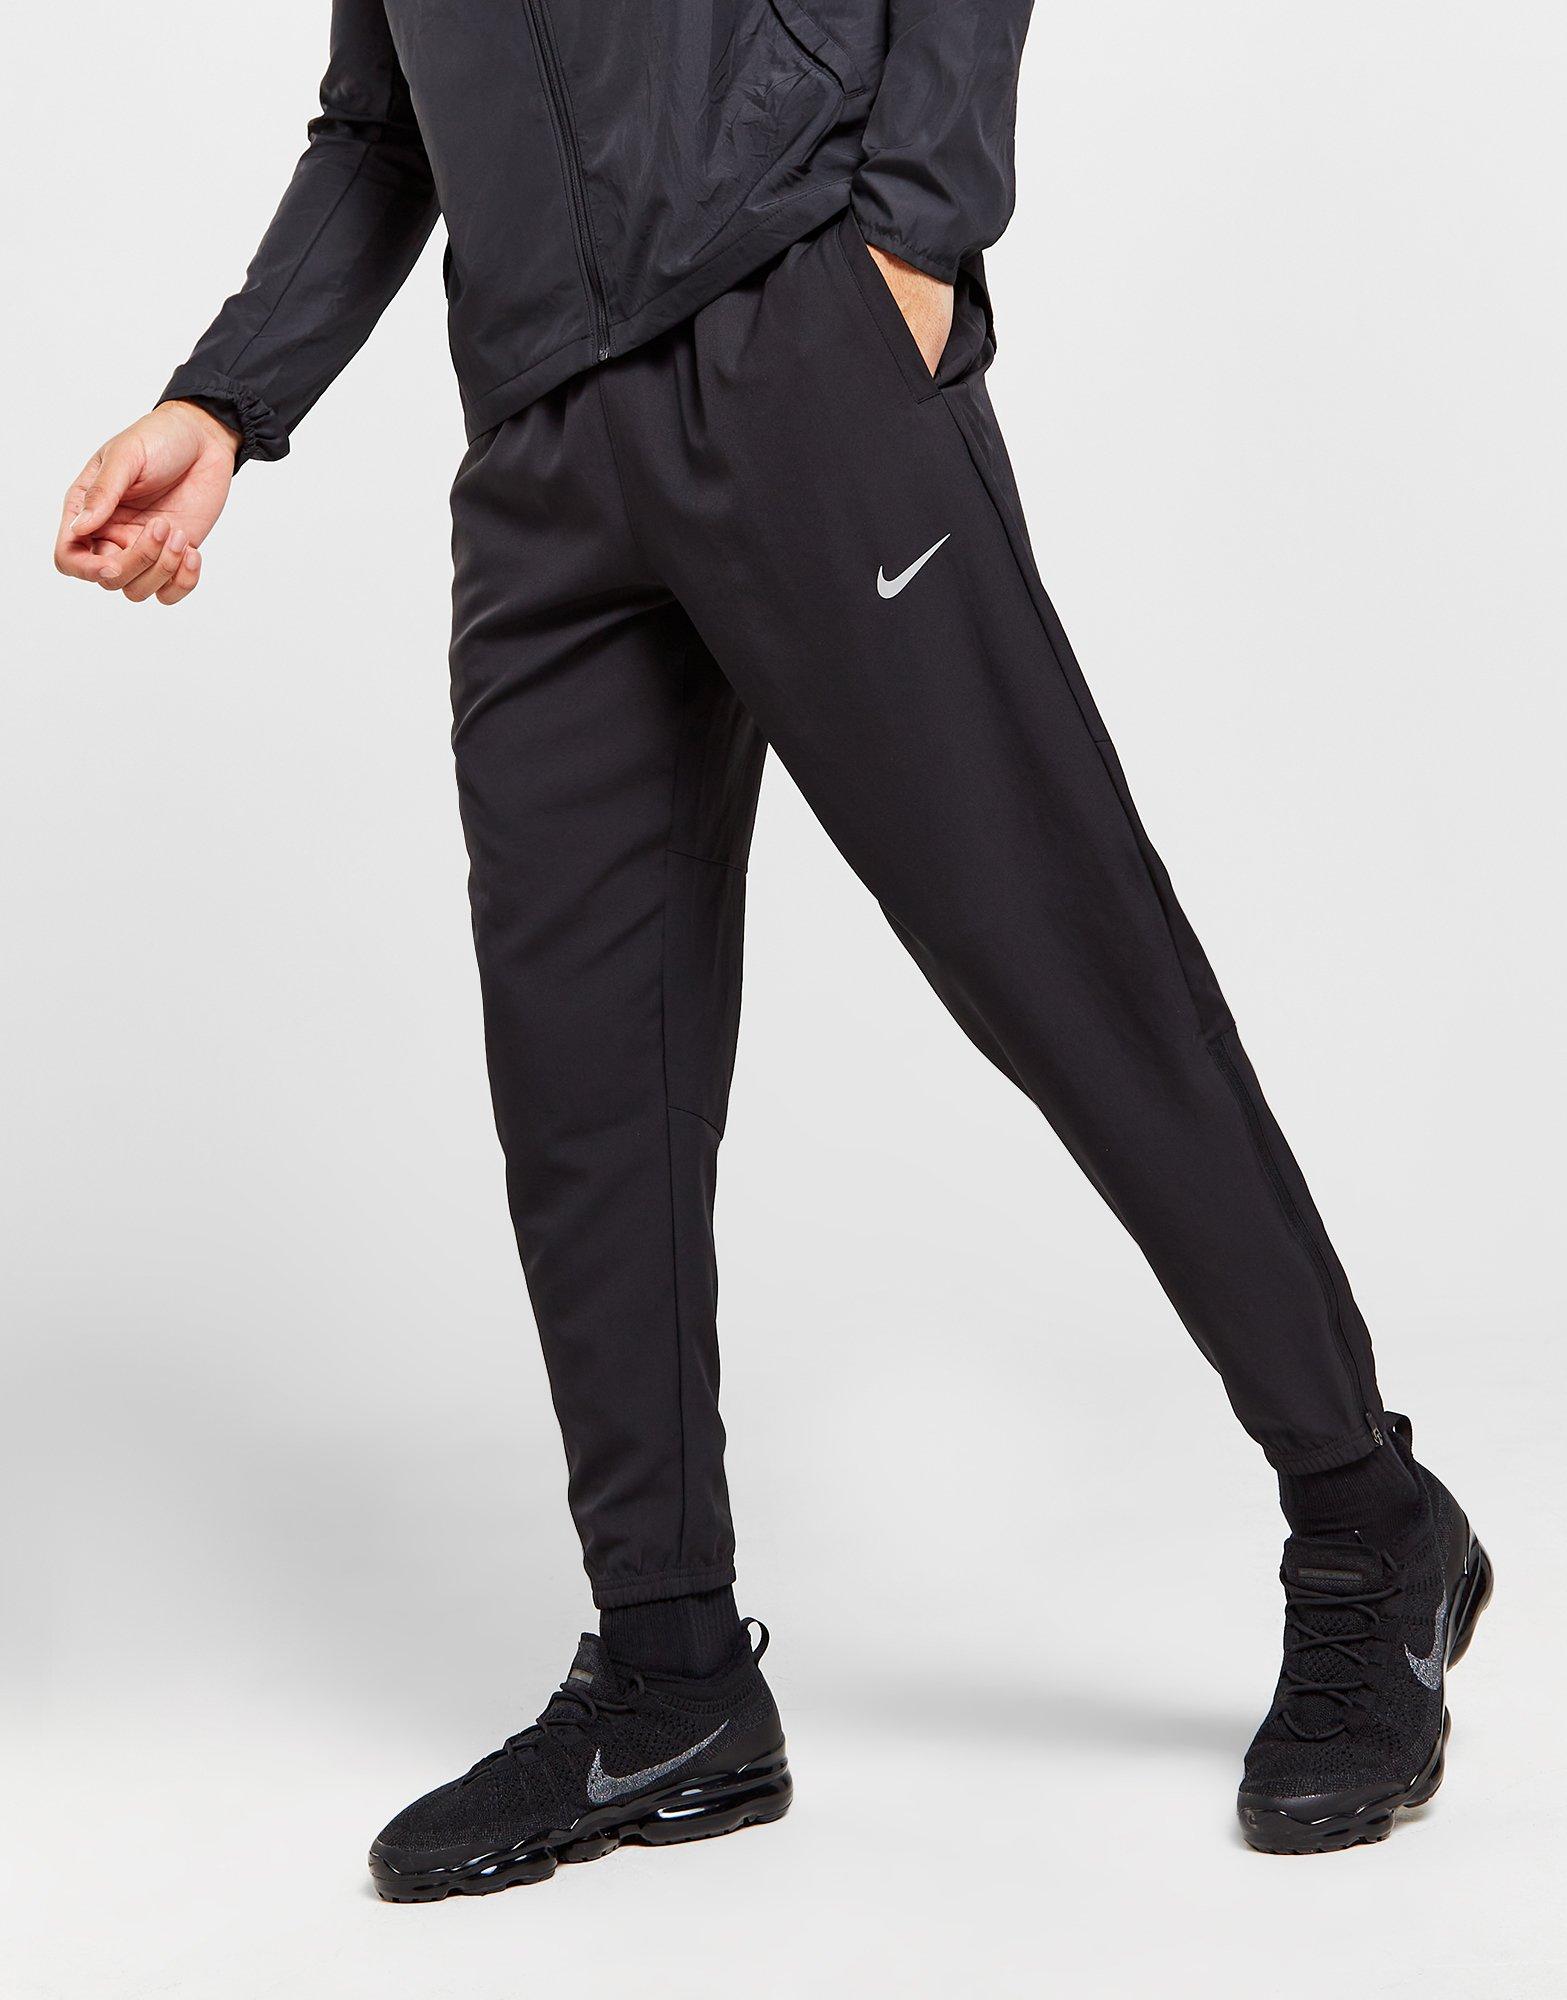 Girls Nike Sweatpants - Size Medium M - Dri-Fit. Please See Description